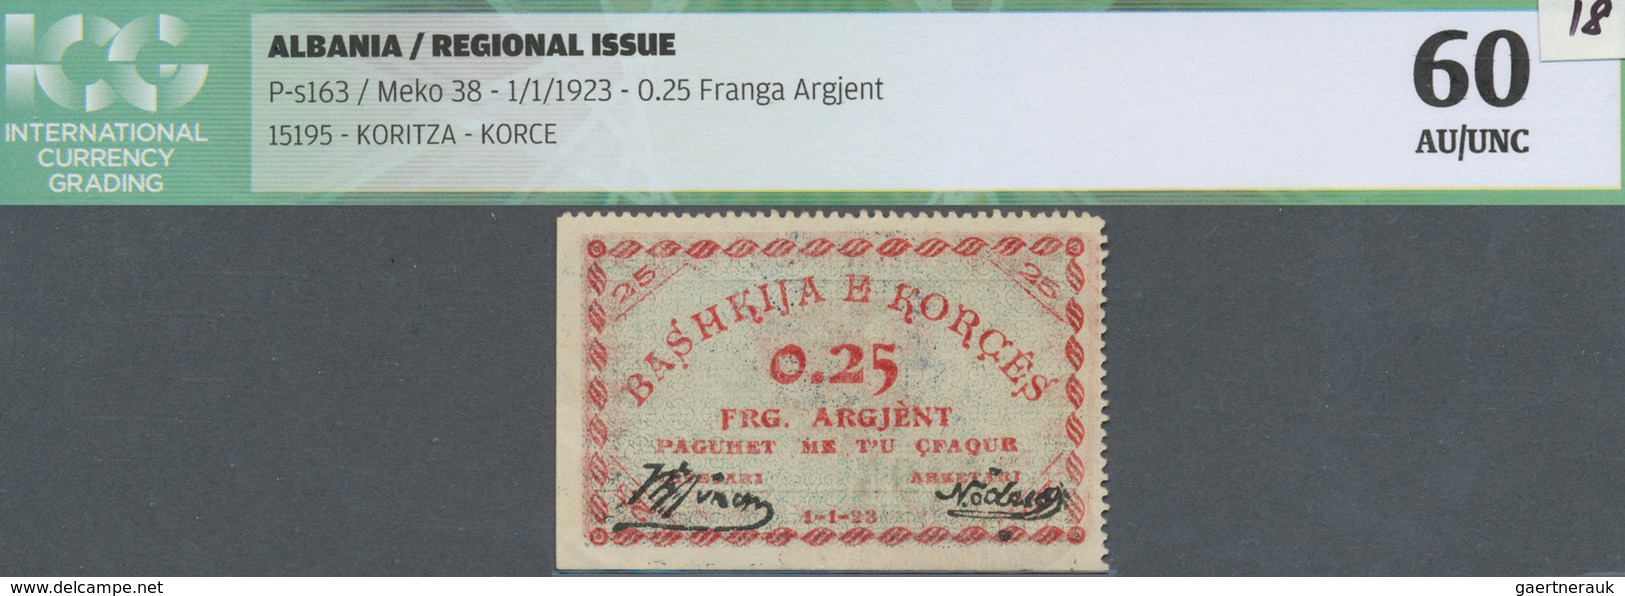 Albania / Albanien: 0.25 Franga Argjent 01.01.1923 P. S163, Unfolded, Crisp Paper And Original Color - Albanië